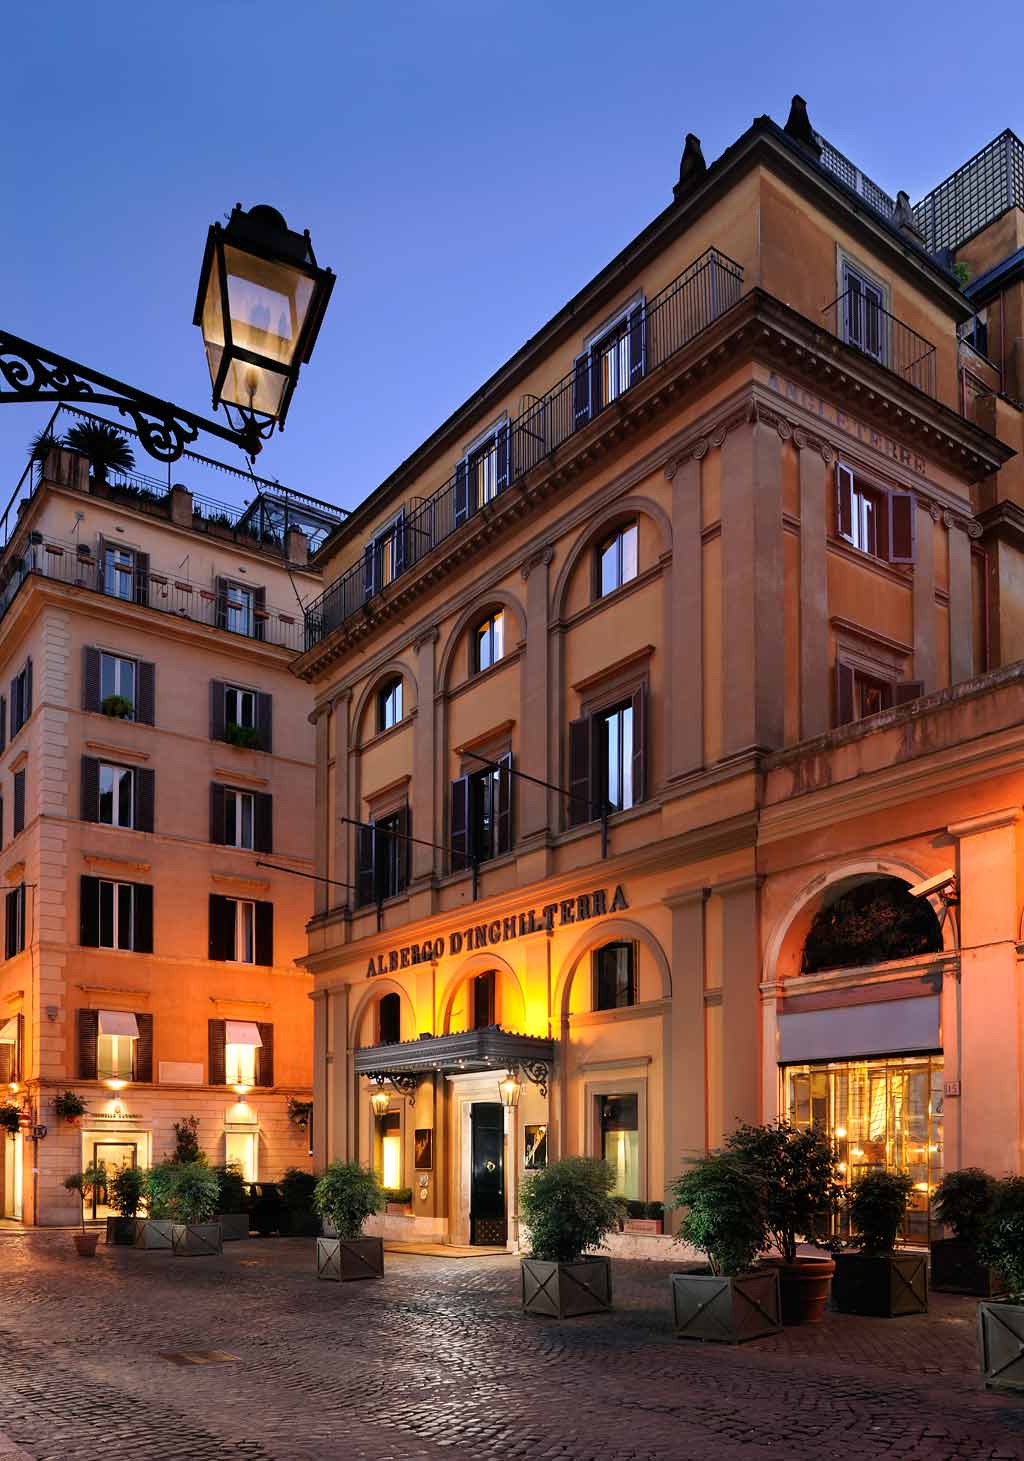 Hotel d'Inghilterra Rome, Italy